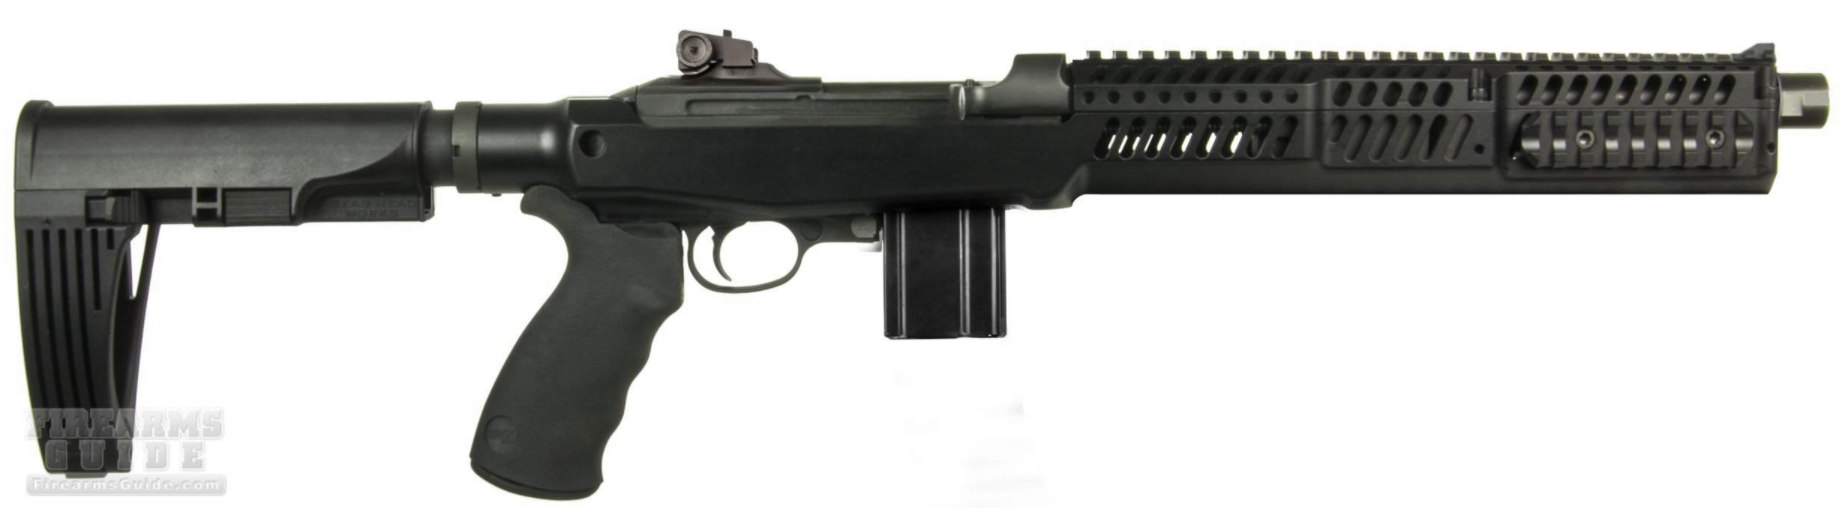 Inland M30-Pistol.